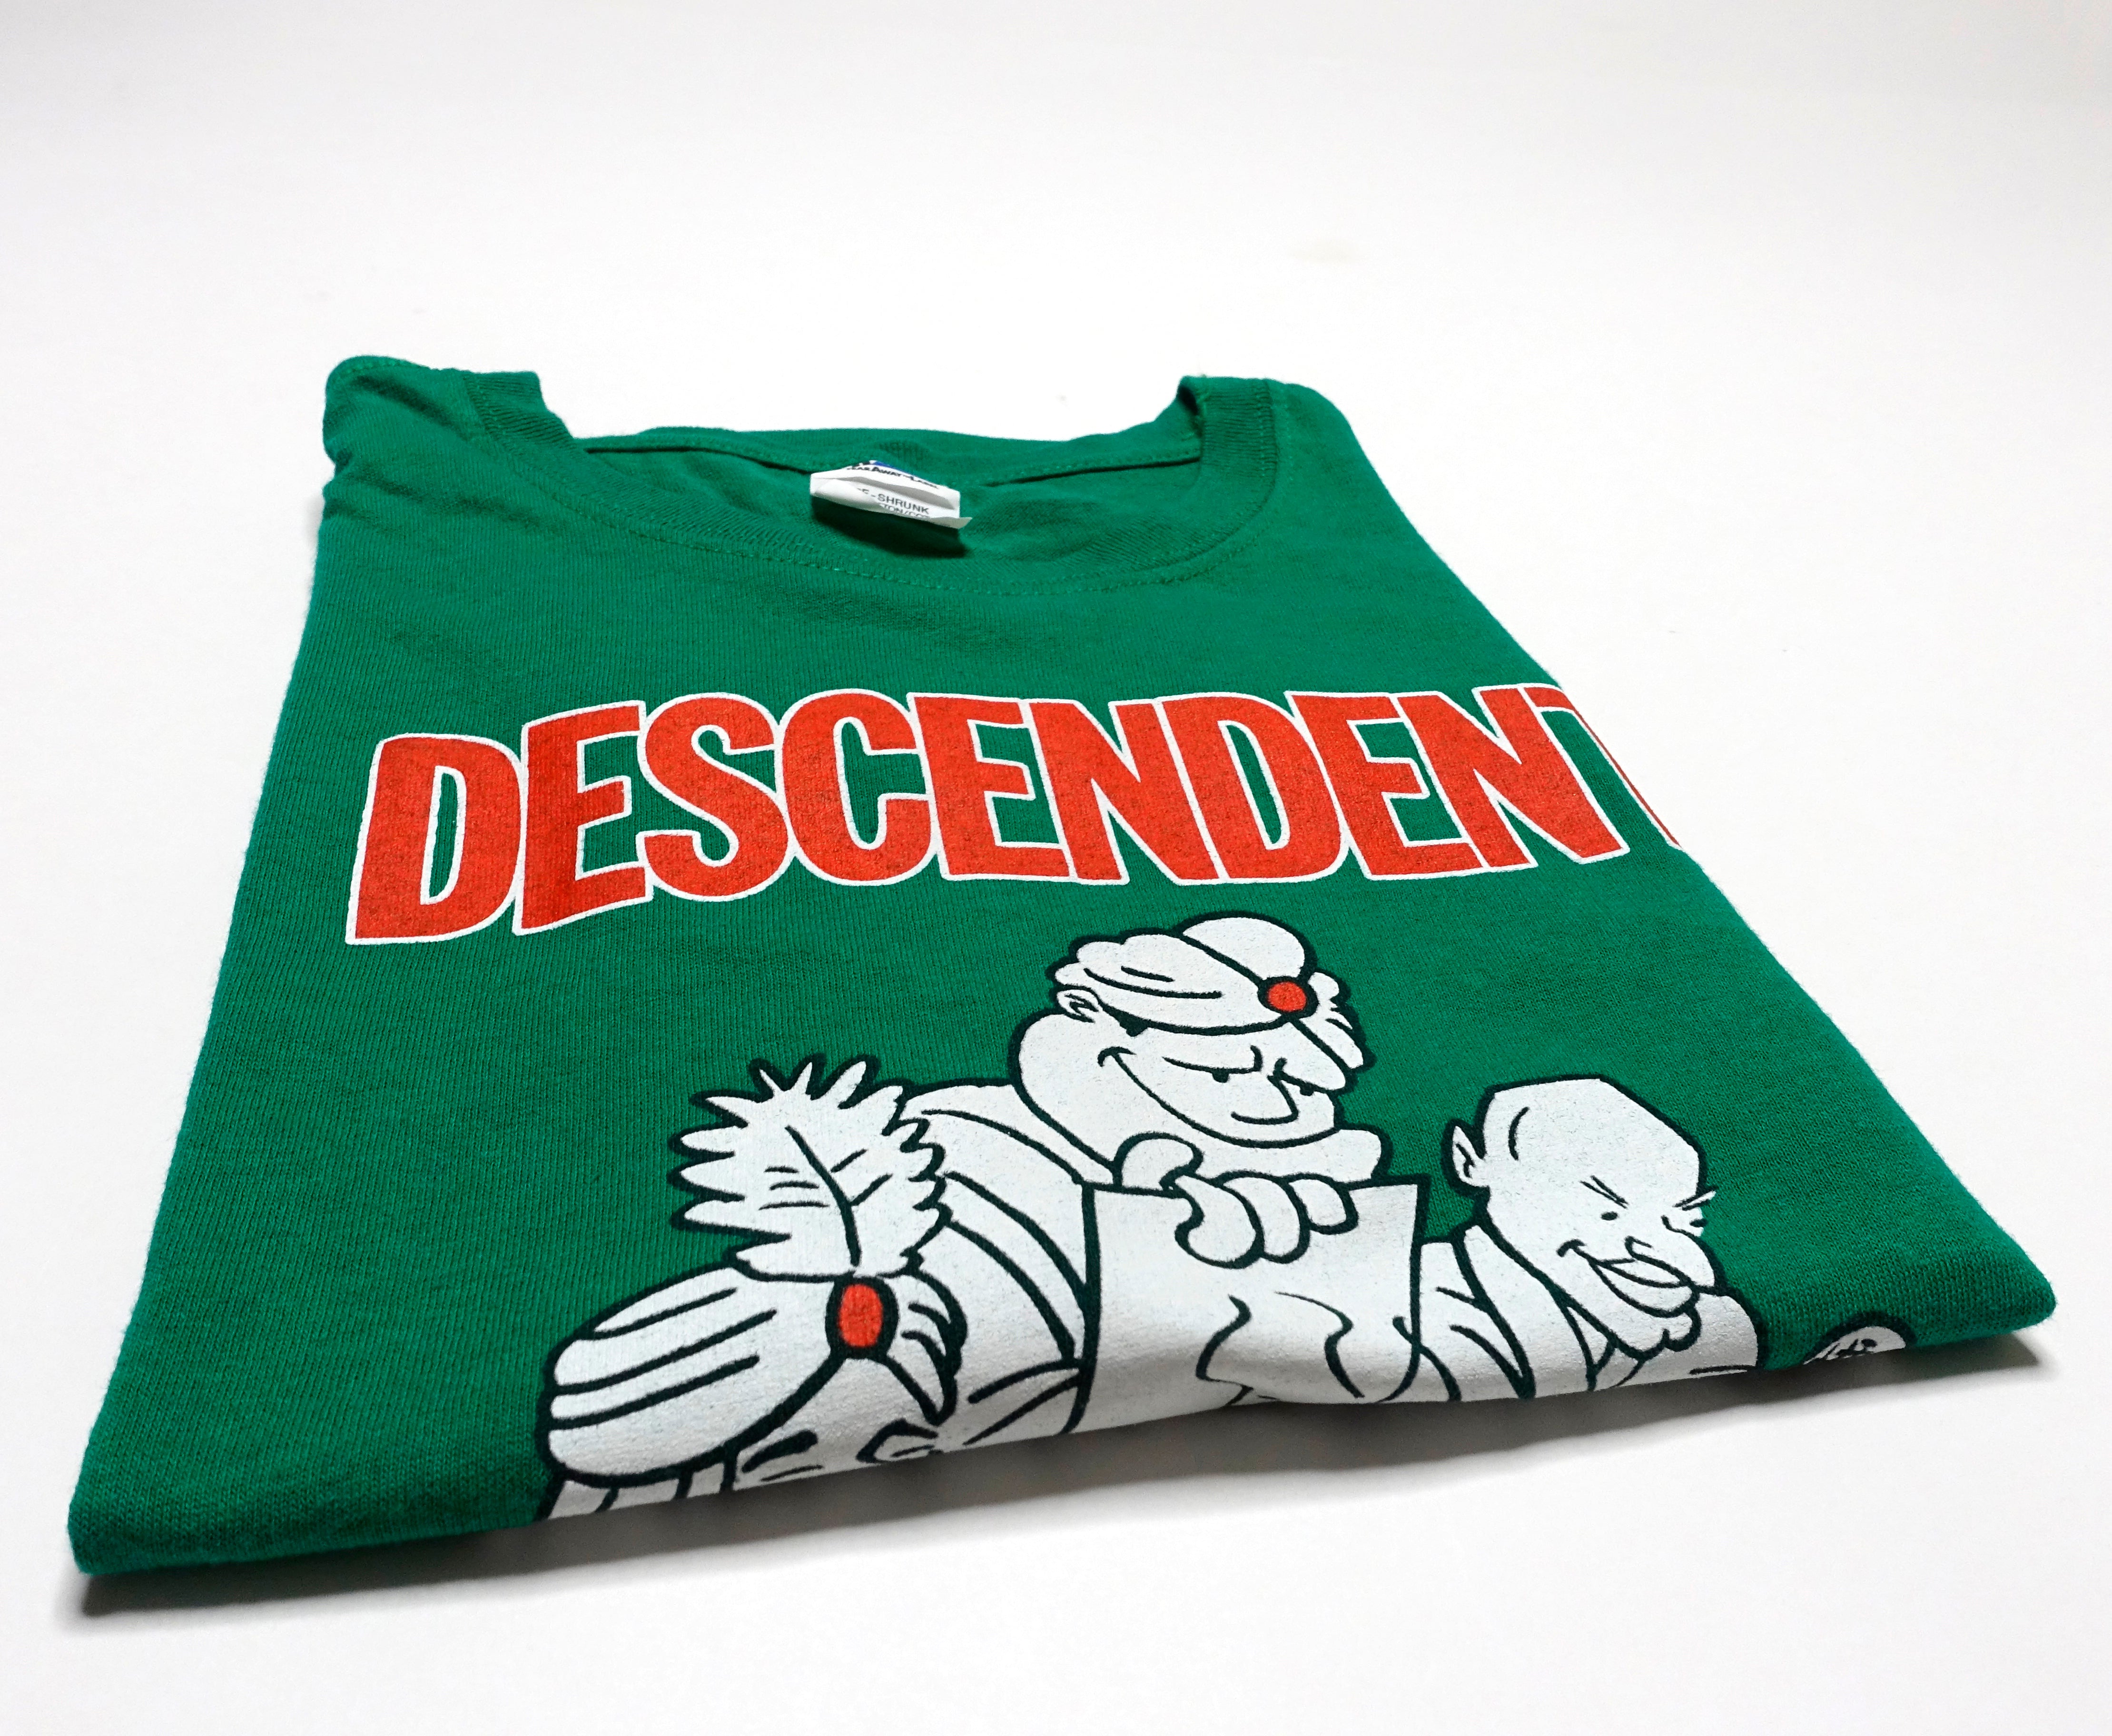 Descendents - Christmas Vacation 2011 Tour Shirt Size Large